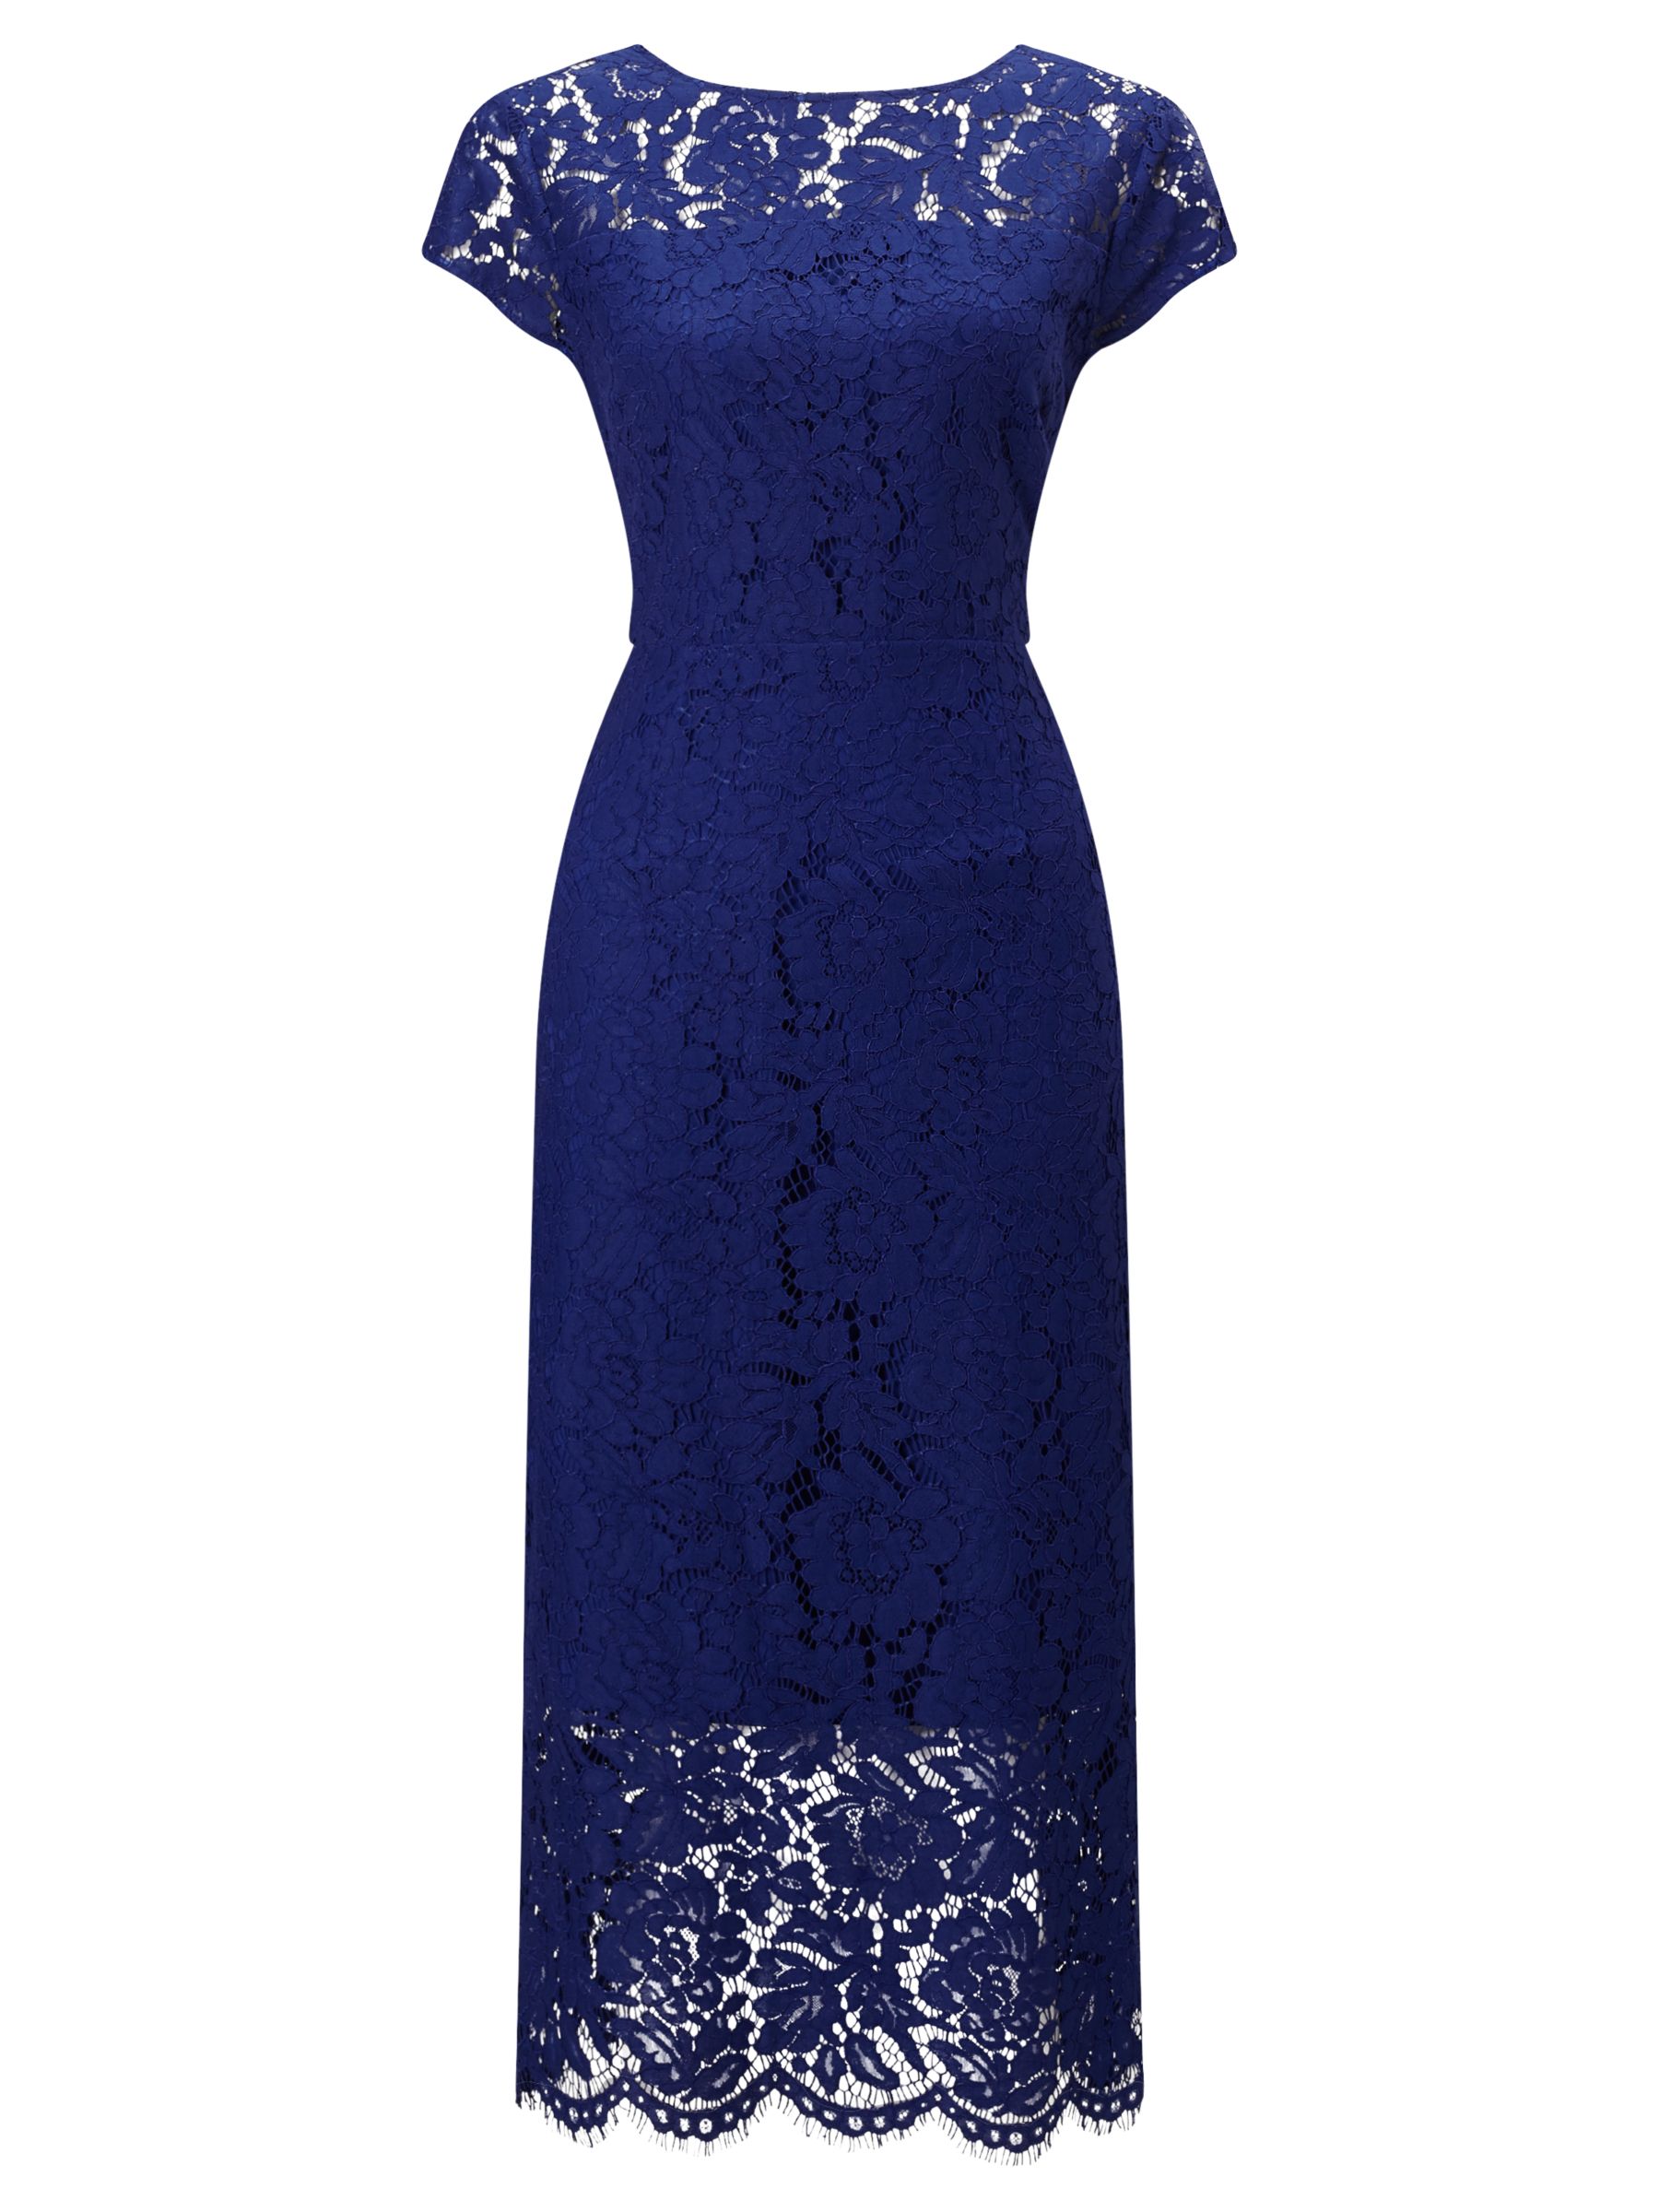 John Lewis & Partners Short Sleeve Lace Dress, Blue, 12